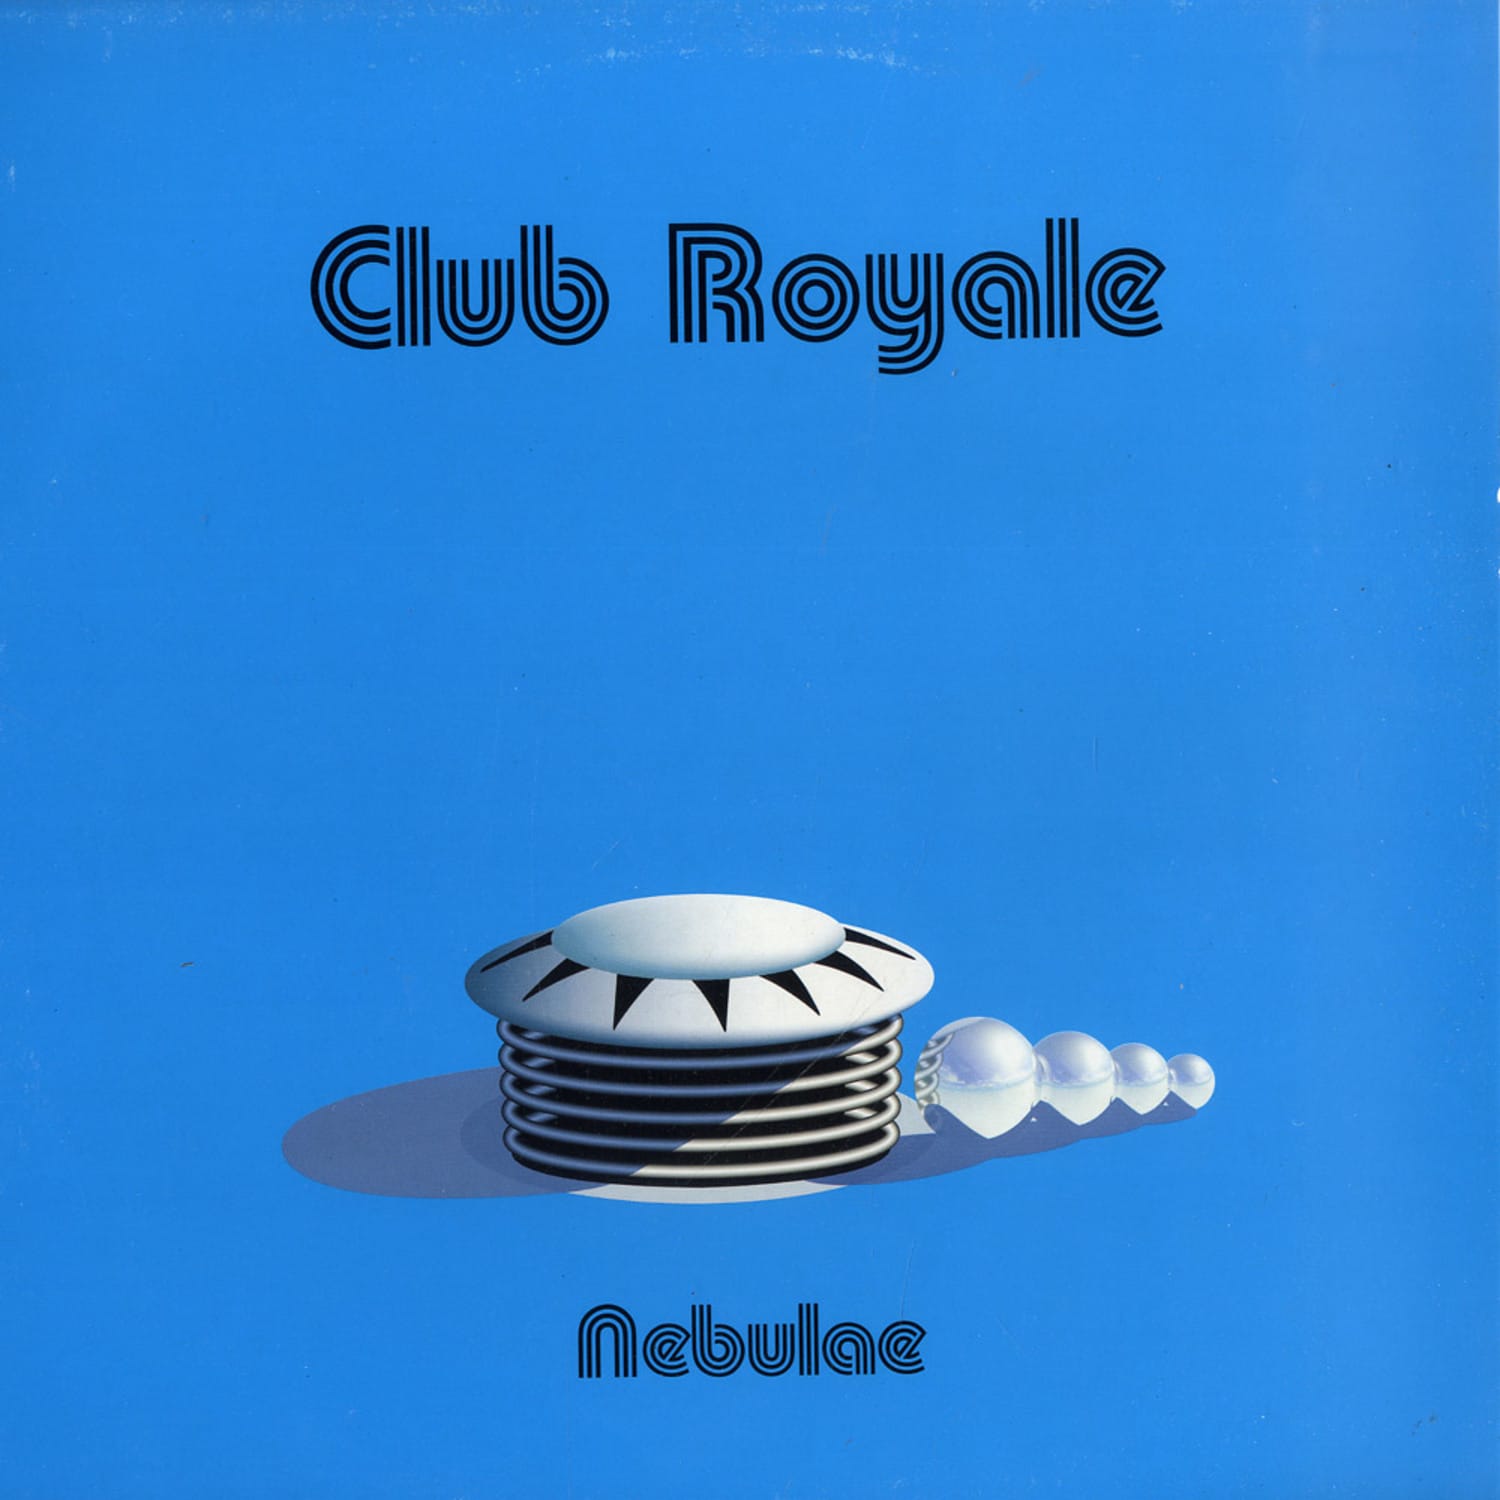 Club Royale - NEBULAE